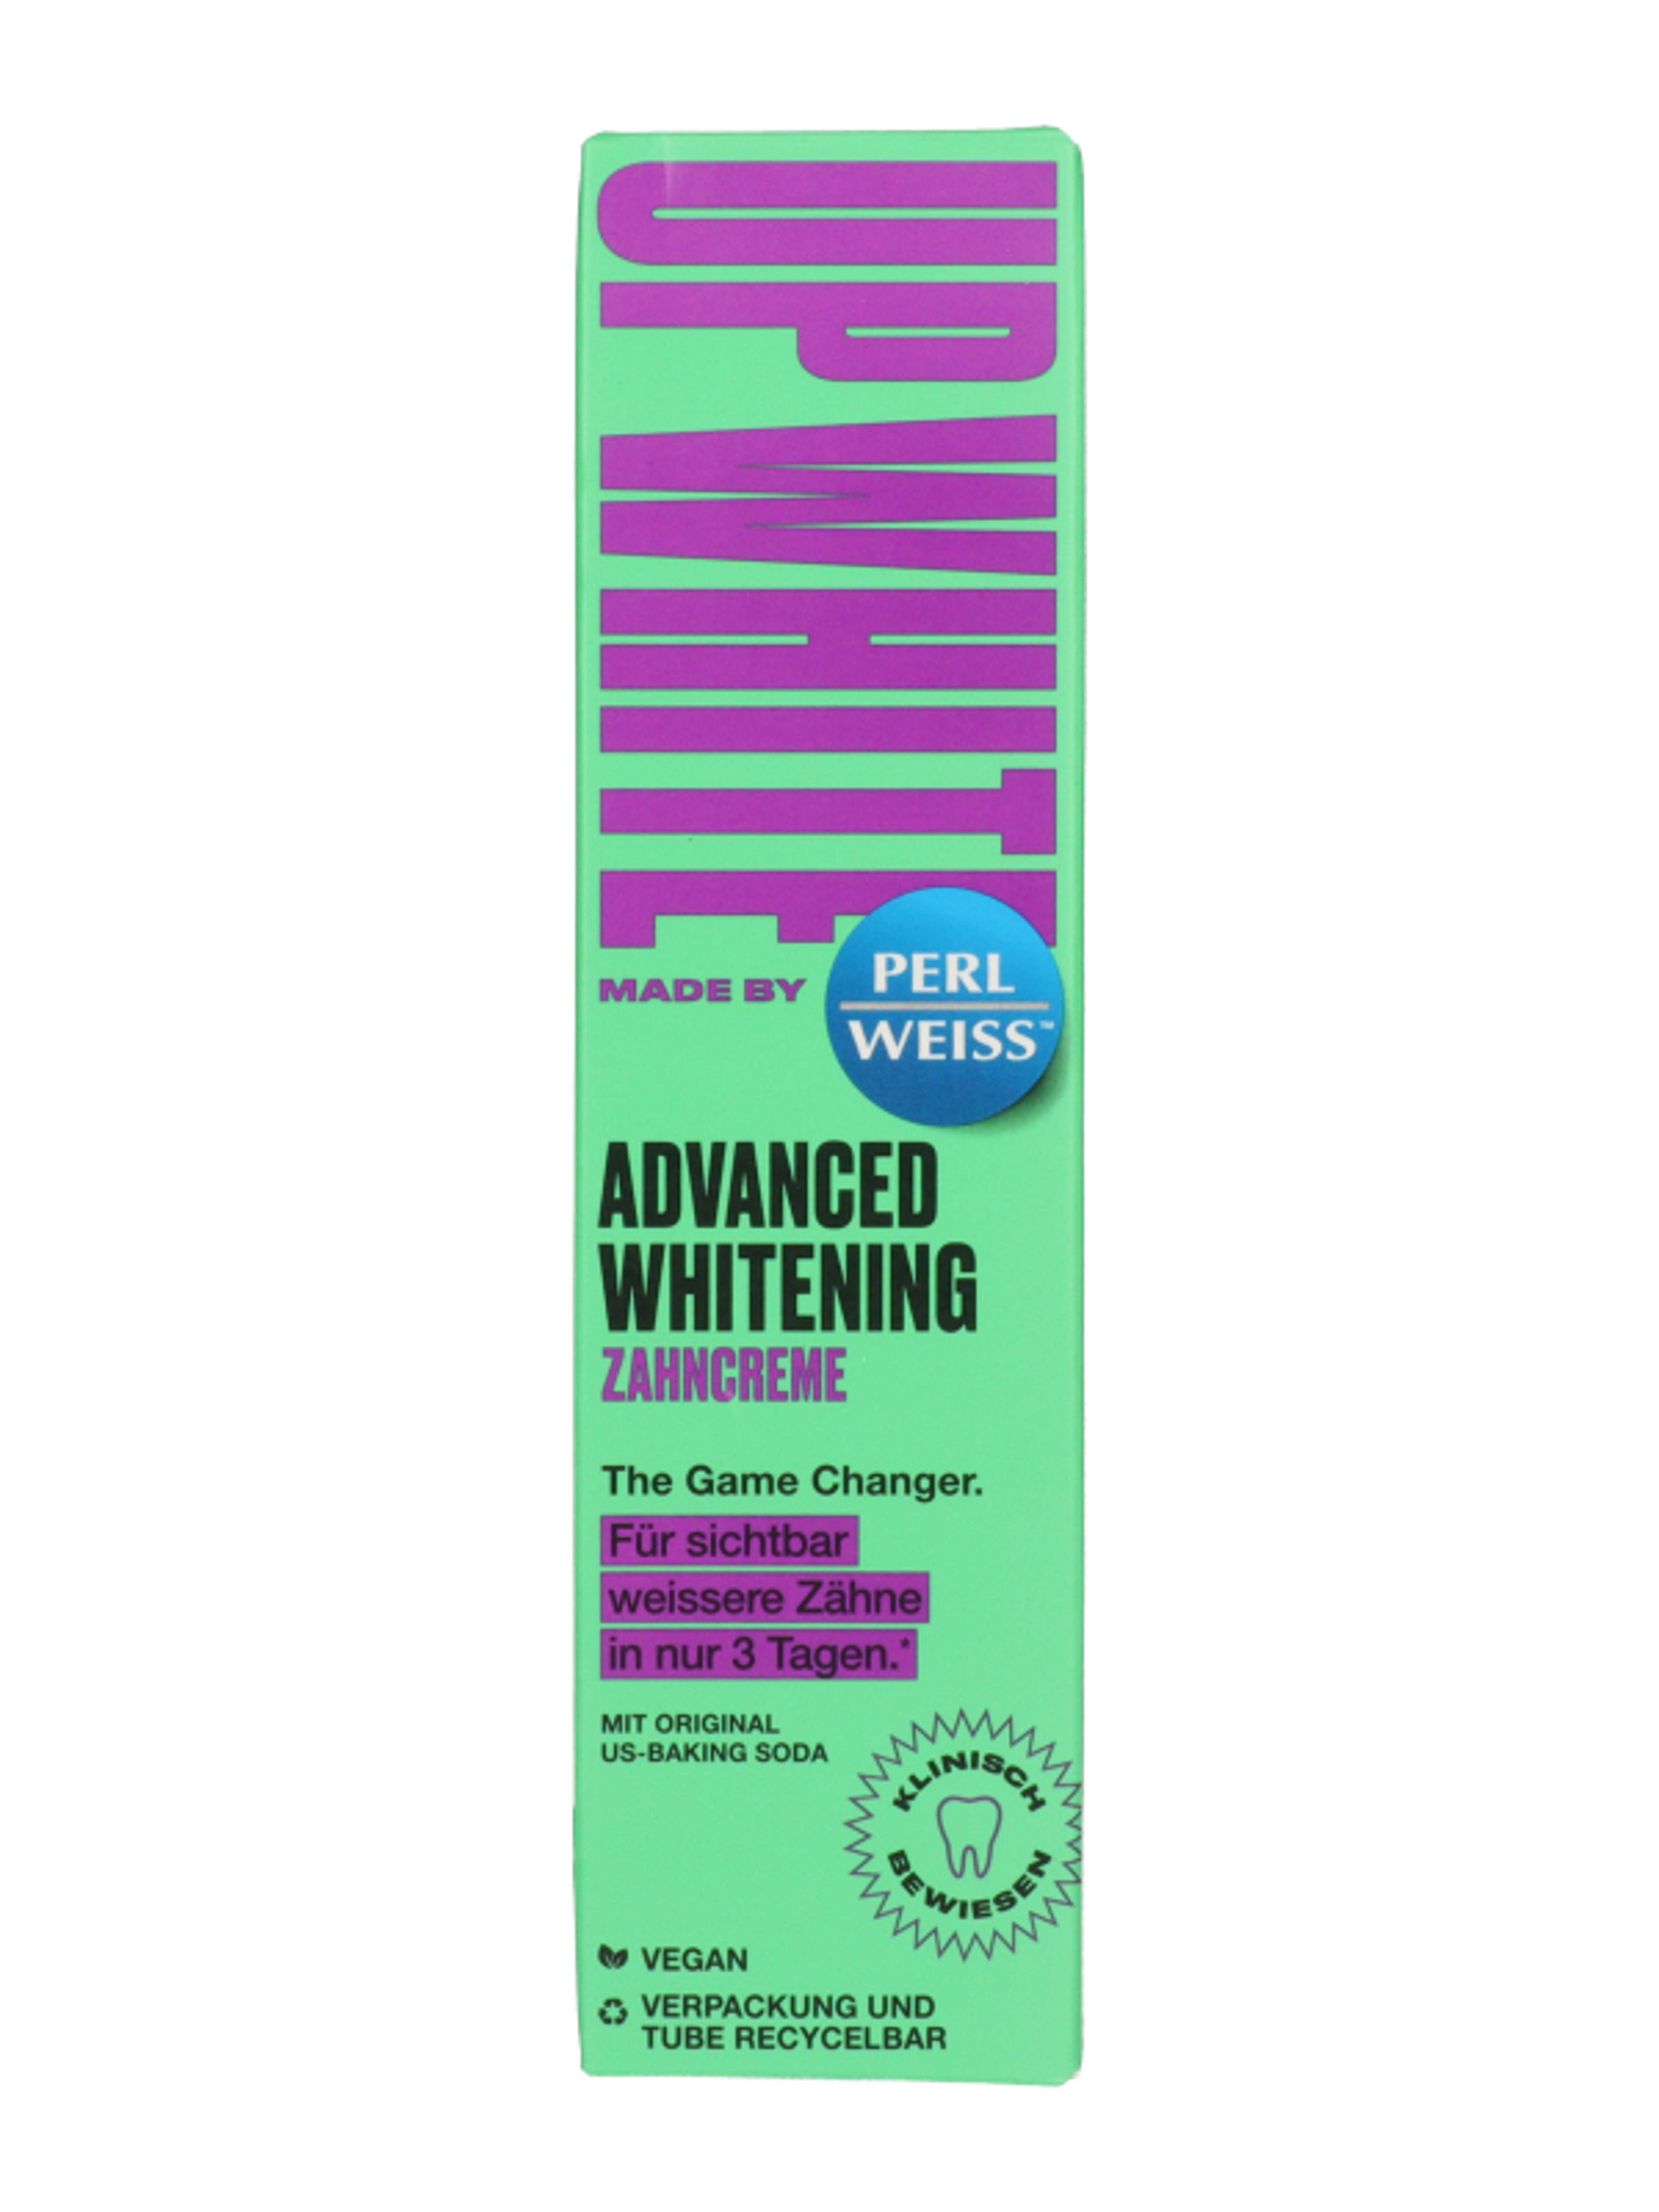 Perlweiss Advanced Whitening fogfehérítő - 75 ml-1